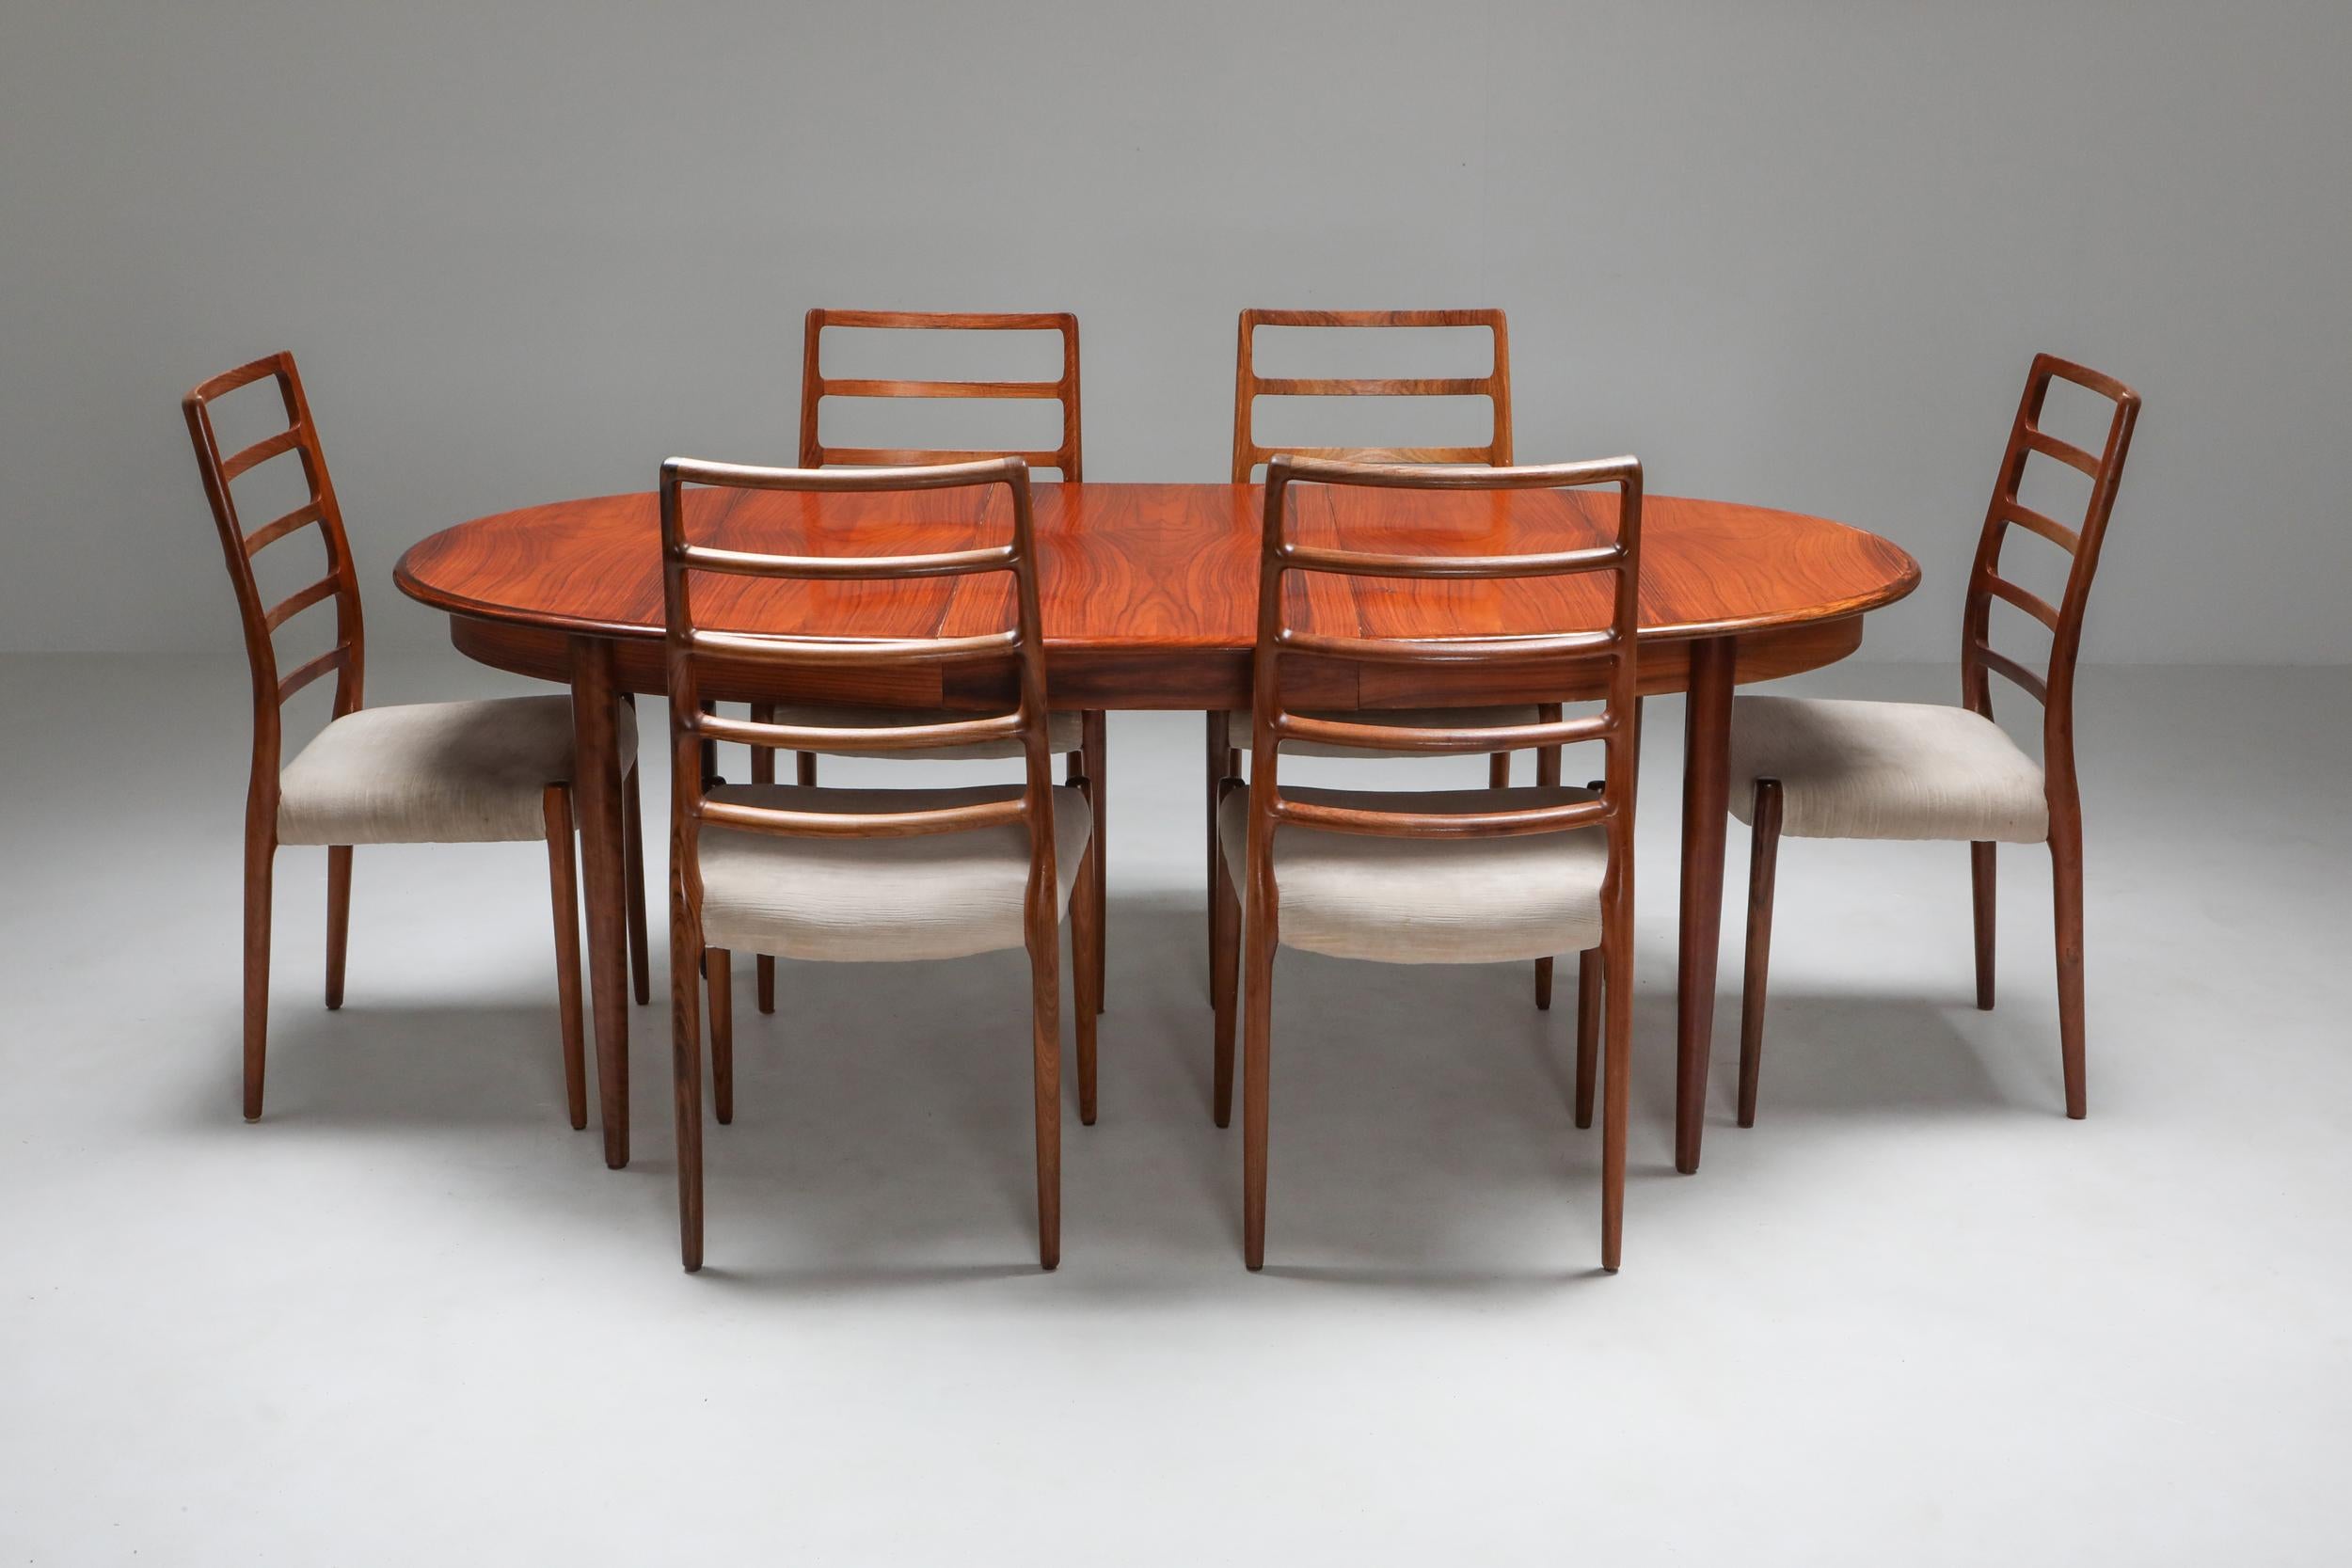 Mid-20th Century Danish Modern Extendable Dining Table by Møller